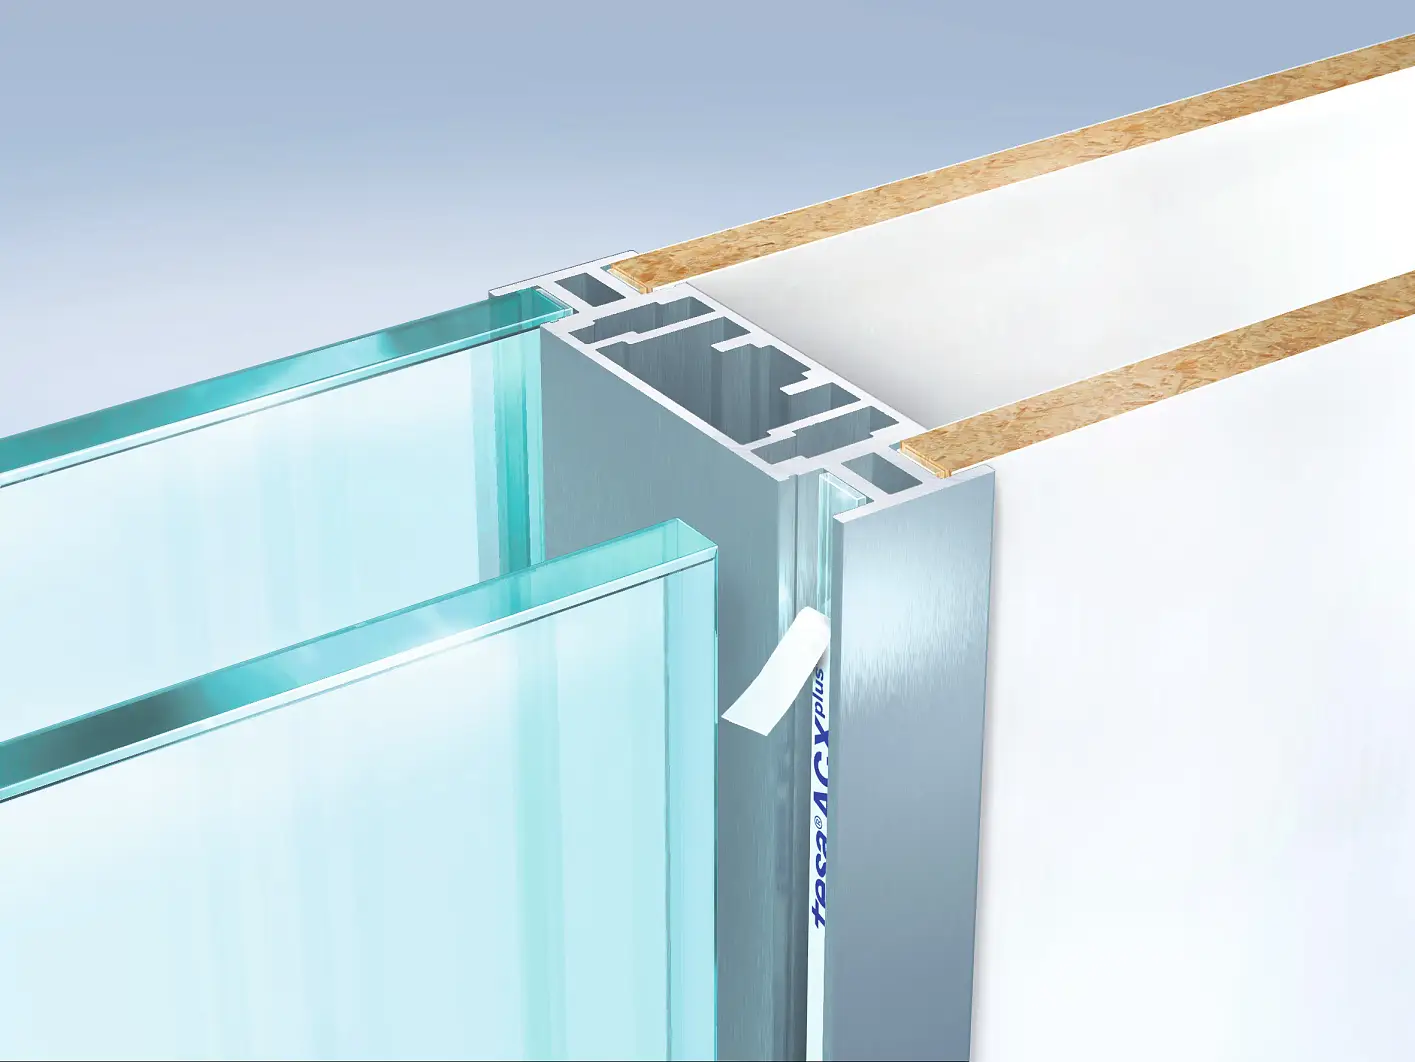 Bonding glass or laminated wood into or onto aluminium frame